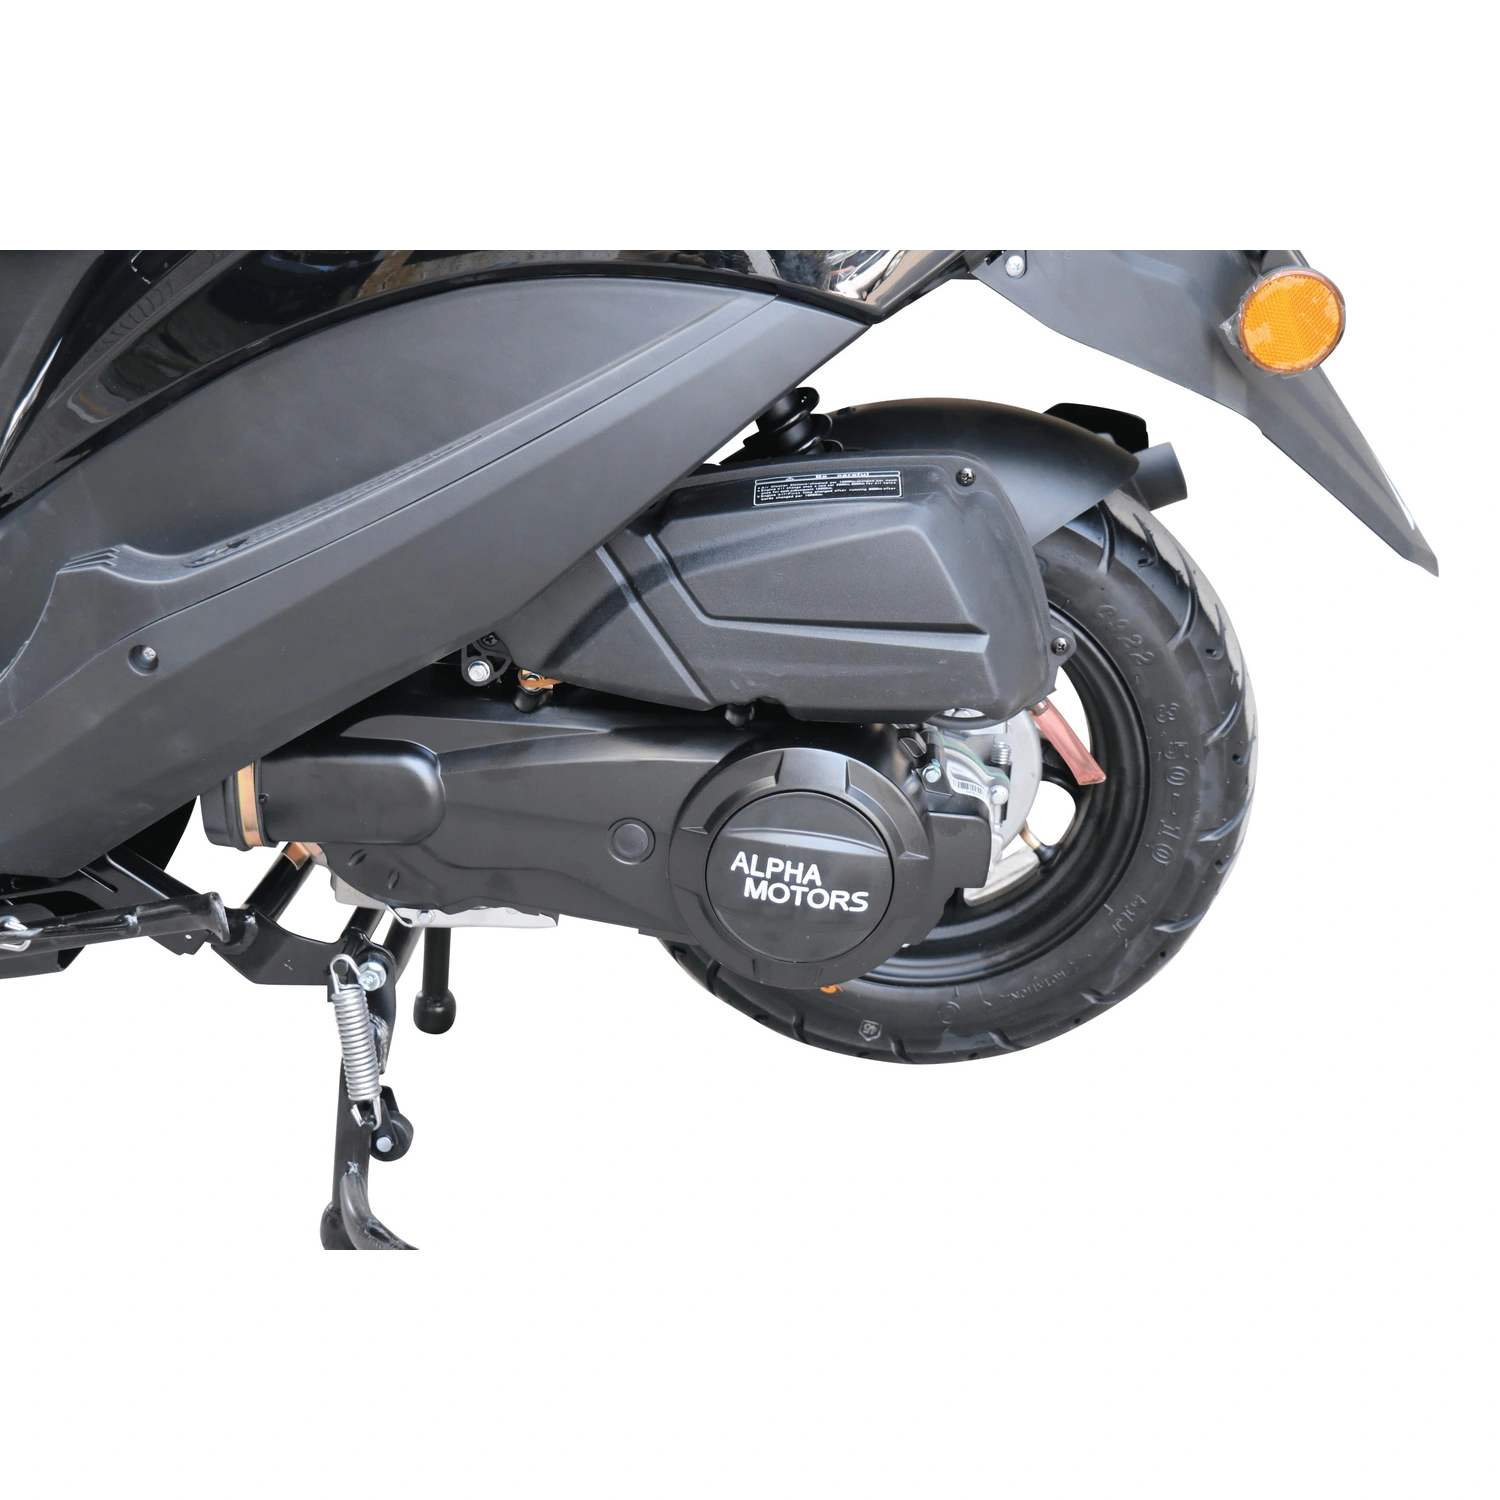 ALPHA MOTORS Motorroller »Topdrive «, km/h, 5 85 cm³, 125 Euro